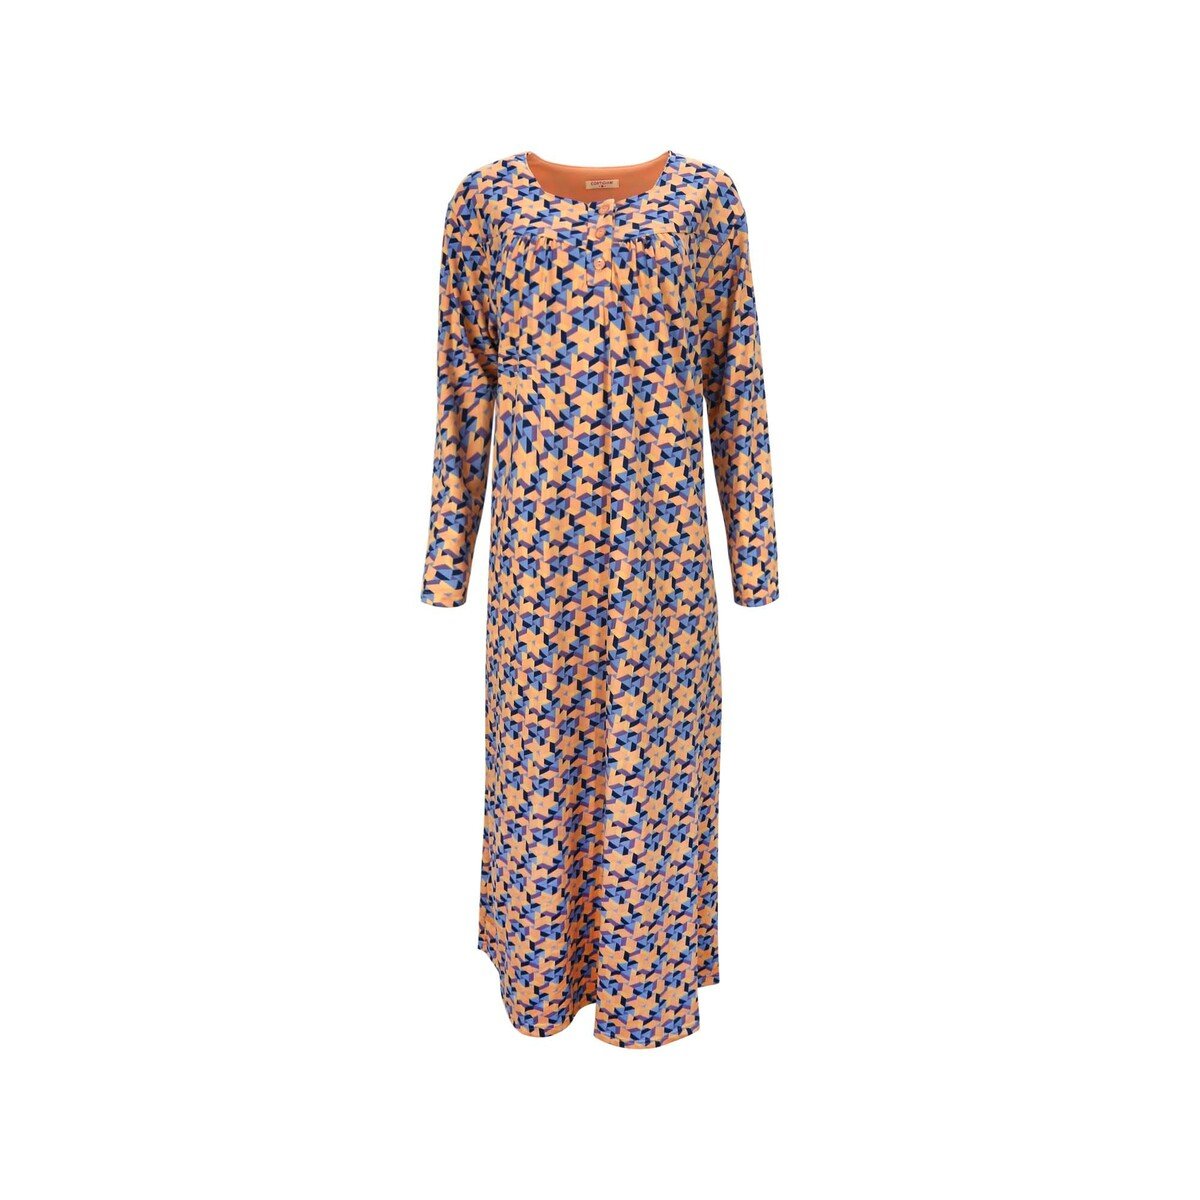 Cortigiani Women's Night Gown Long Sleeve DL-019 Extra Large